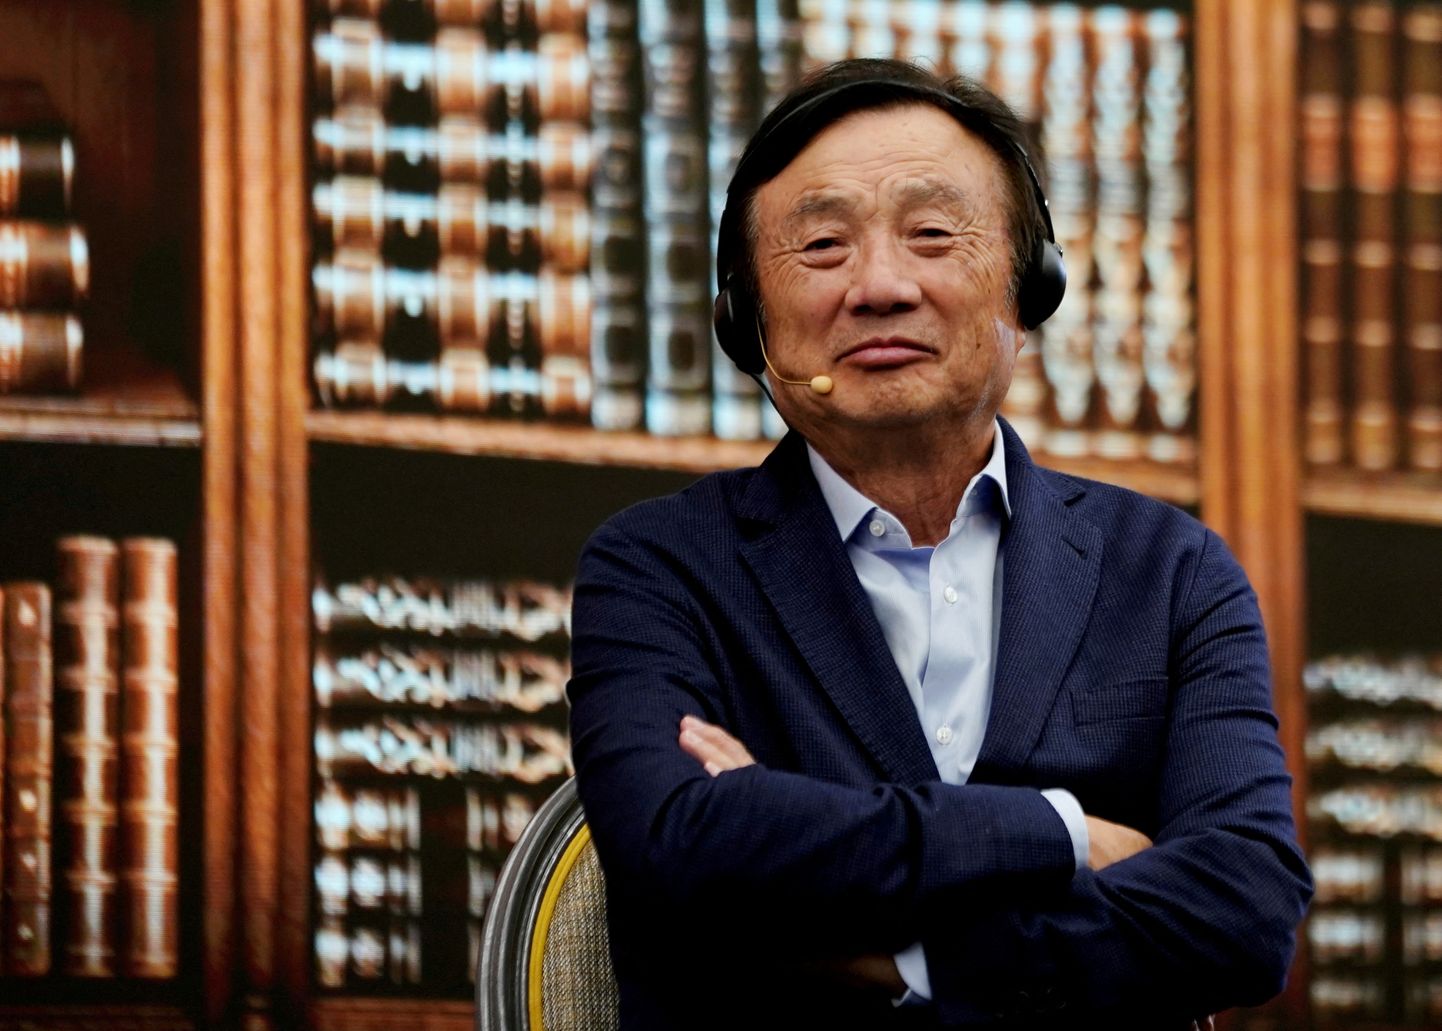 Huawei asutaja Ren Zhengfei sõnad panid terve riigi kihama